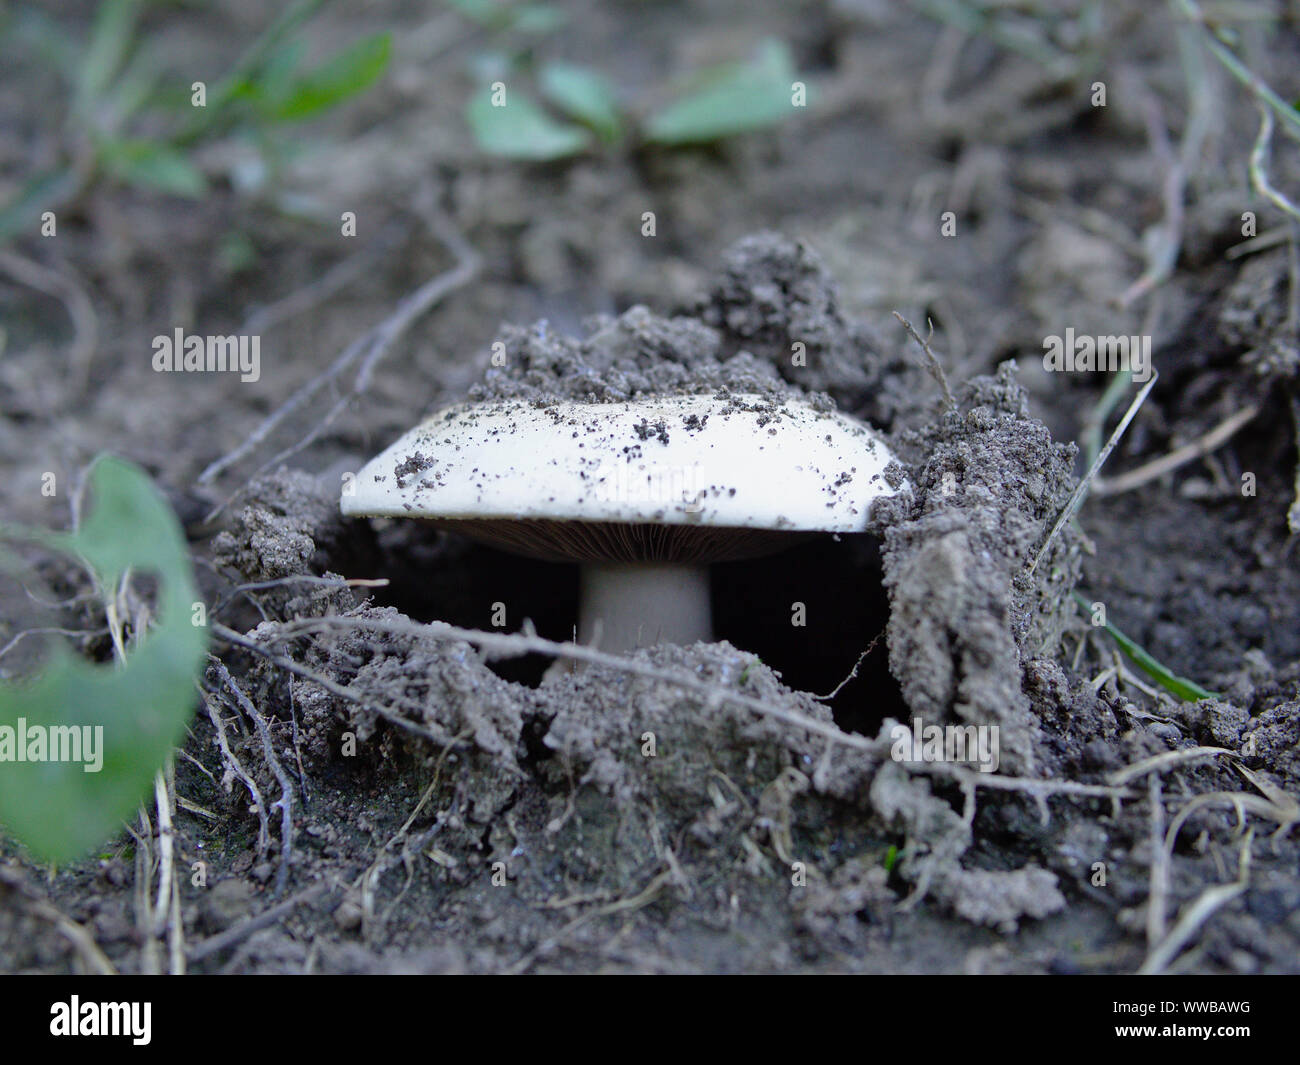 Mushrooms proliferating during a warm, wet, late Summer, Ottawa, Ontario, Canada. Agaricus bitorquis bursting through the soil. Stock Photo